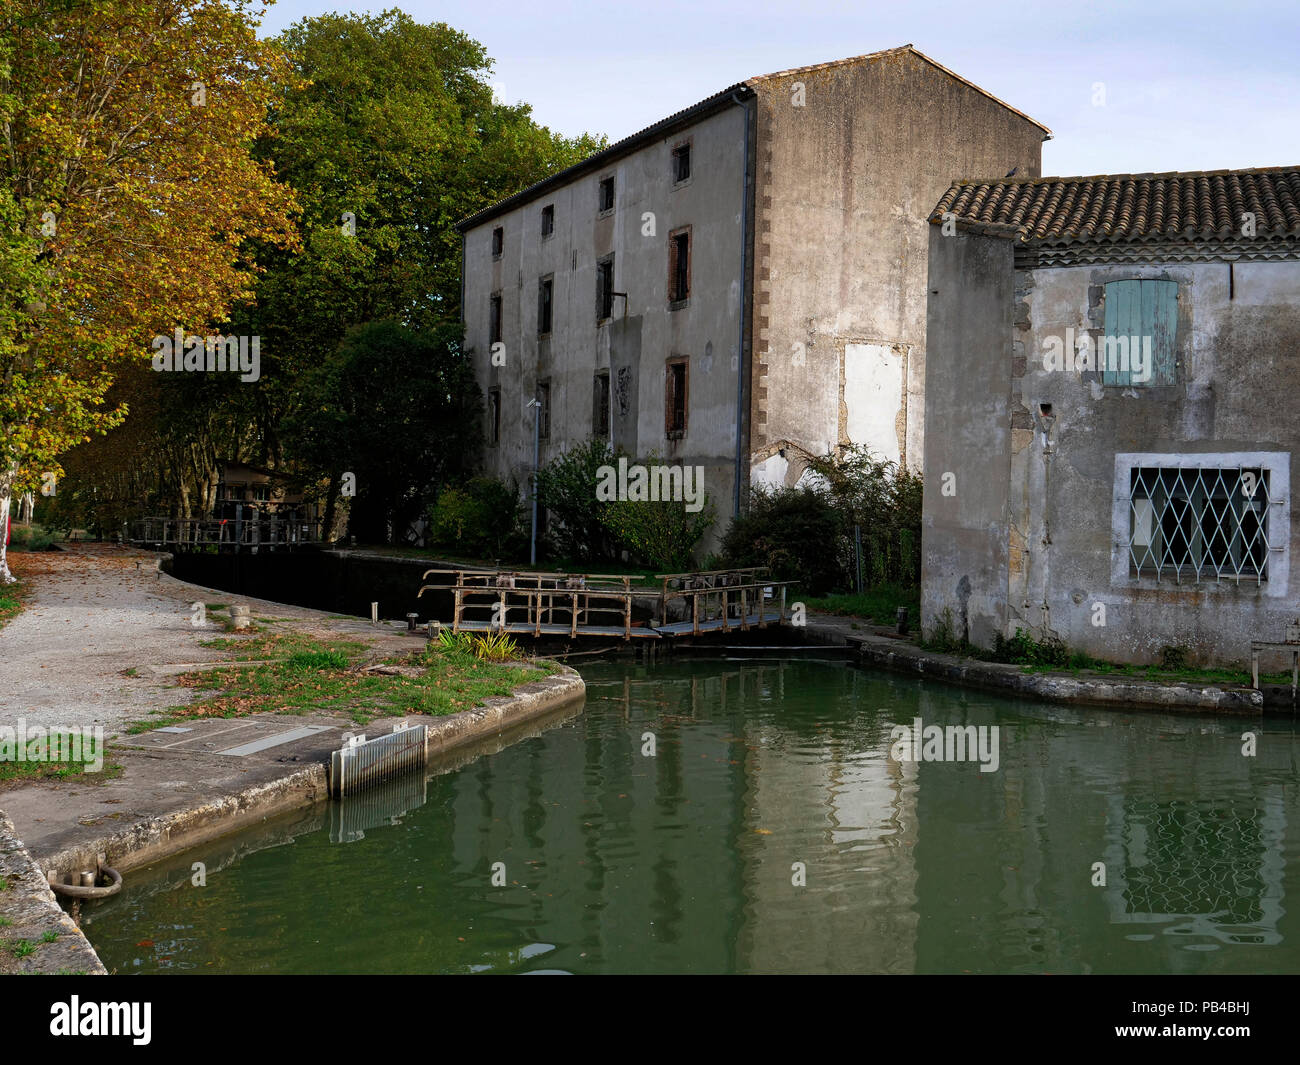 St Roch canal locks at Castelnaudary, Canal du Midi, France Stock Photo